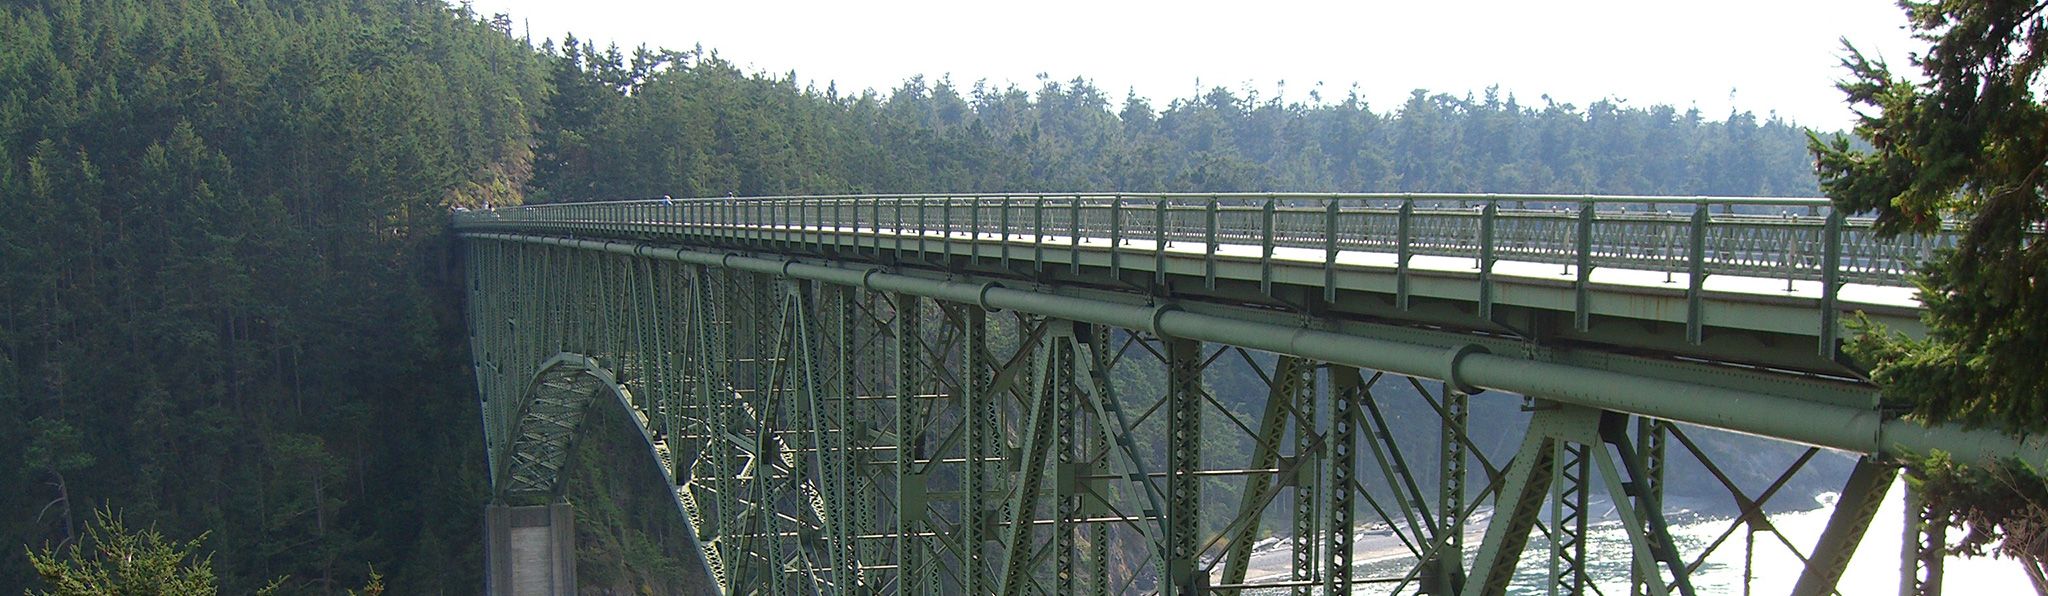 SR20 Deception Pass Bridge